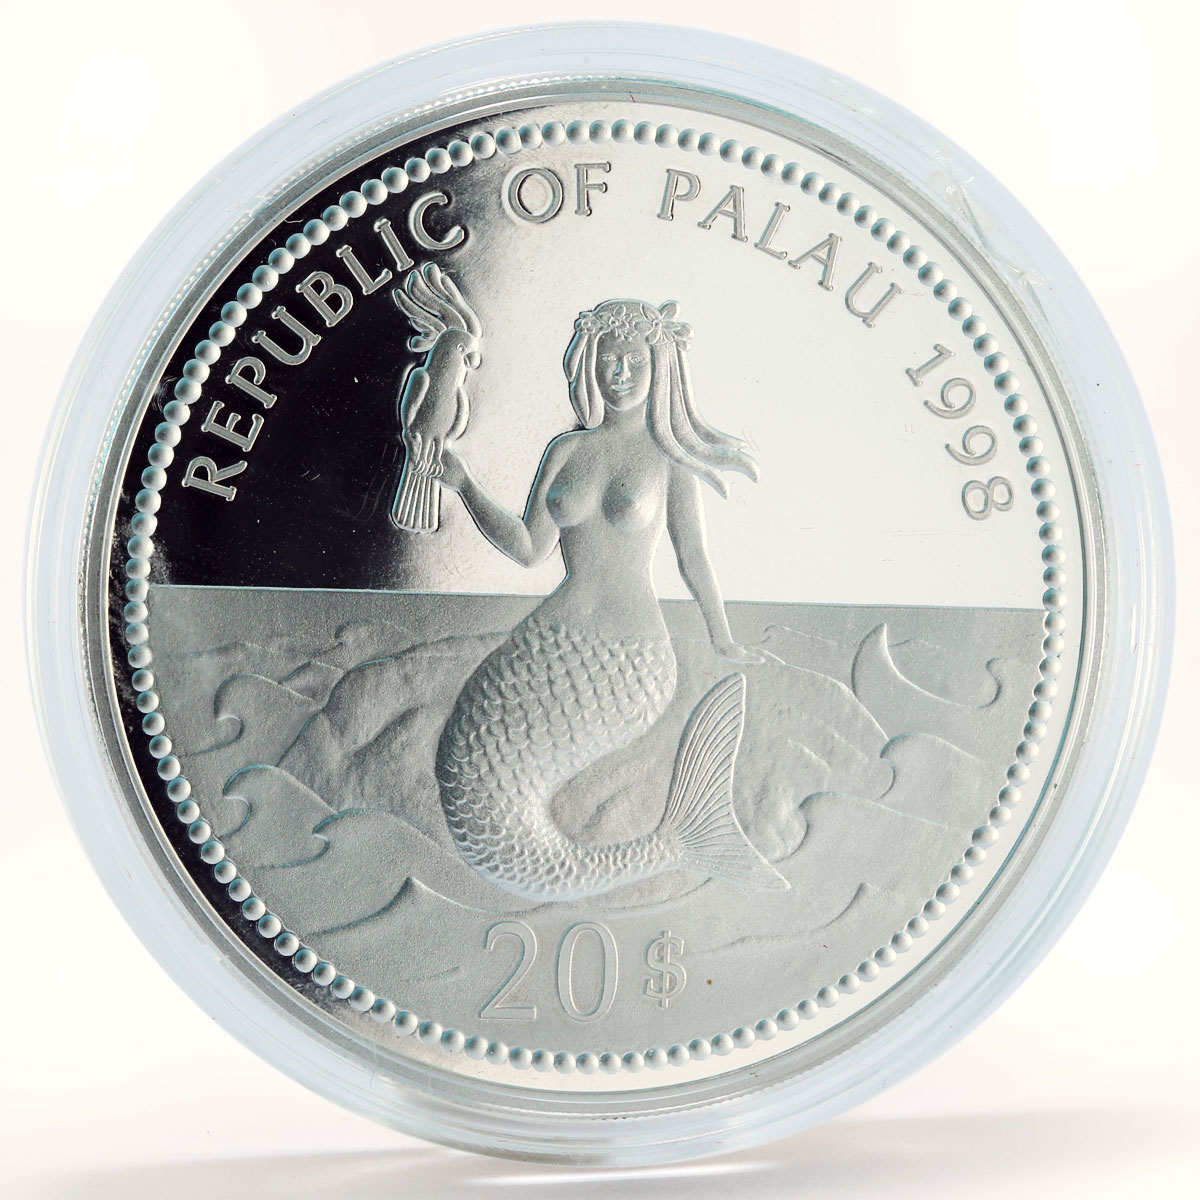 Palau 20 dollars Marine Life Protection series Sea Turtle silver coin 1998